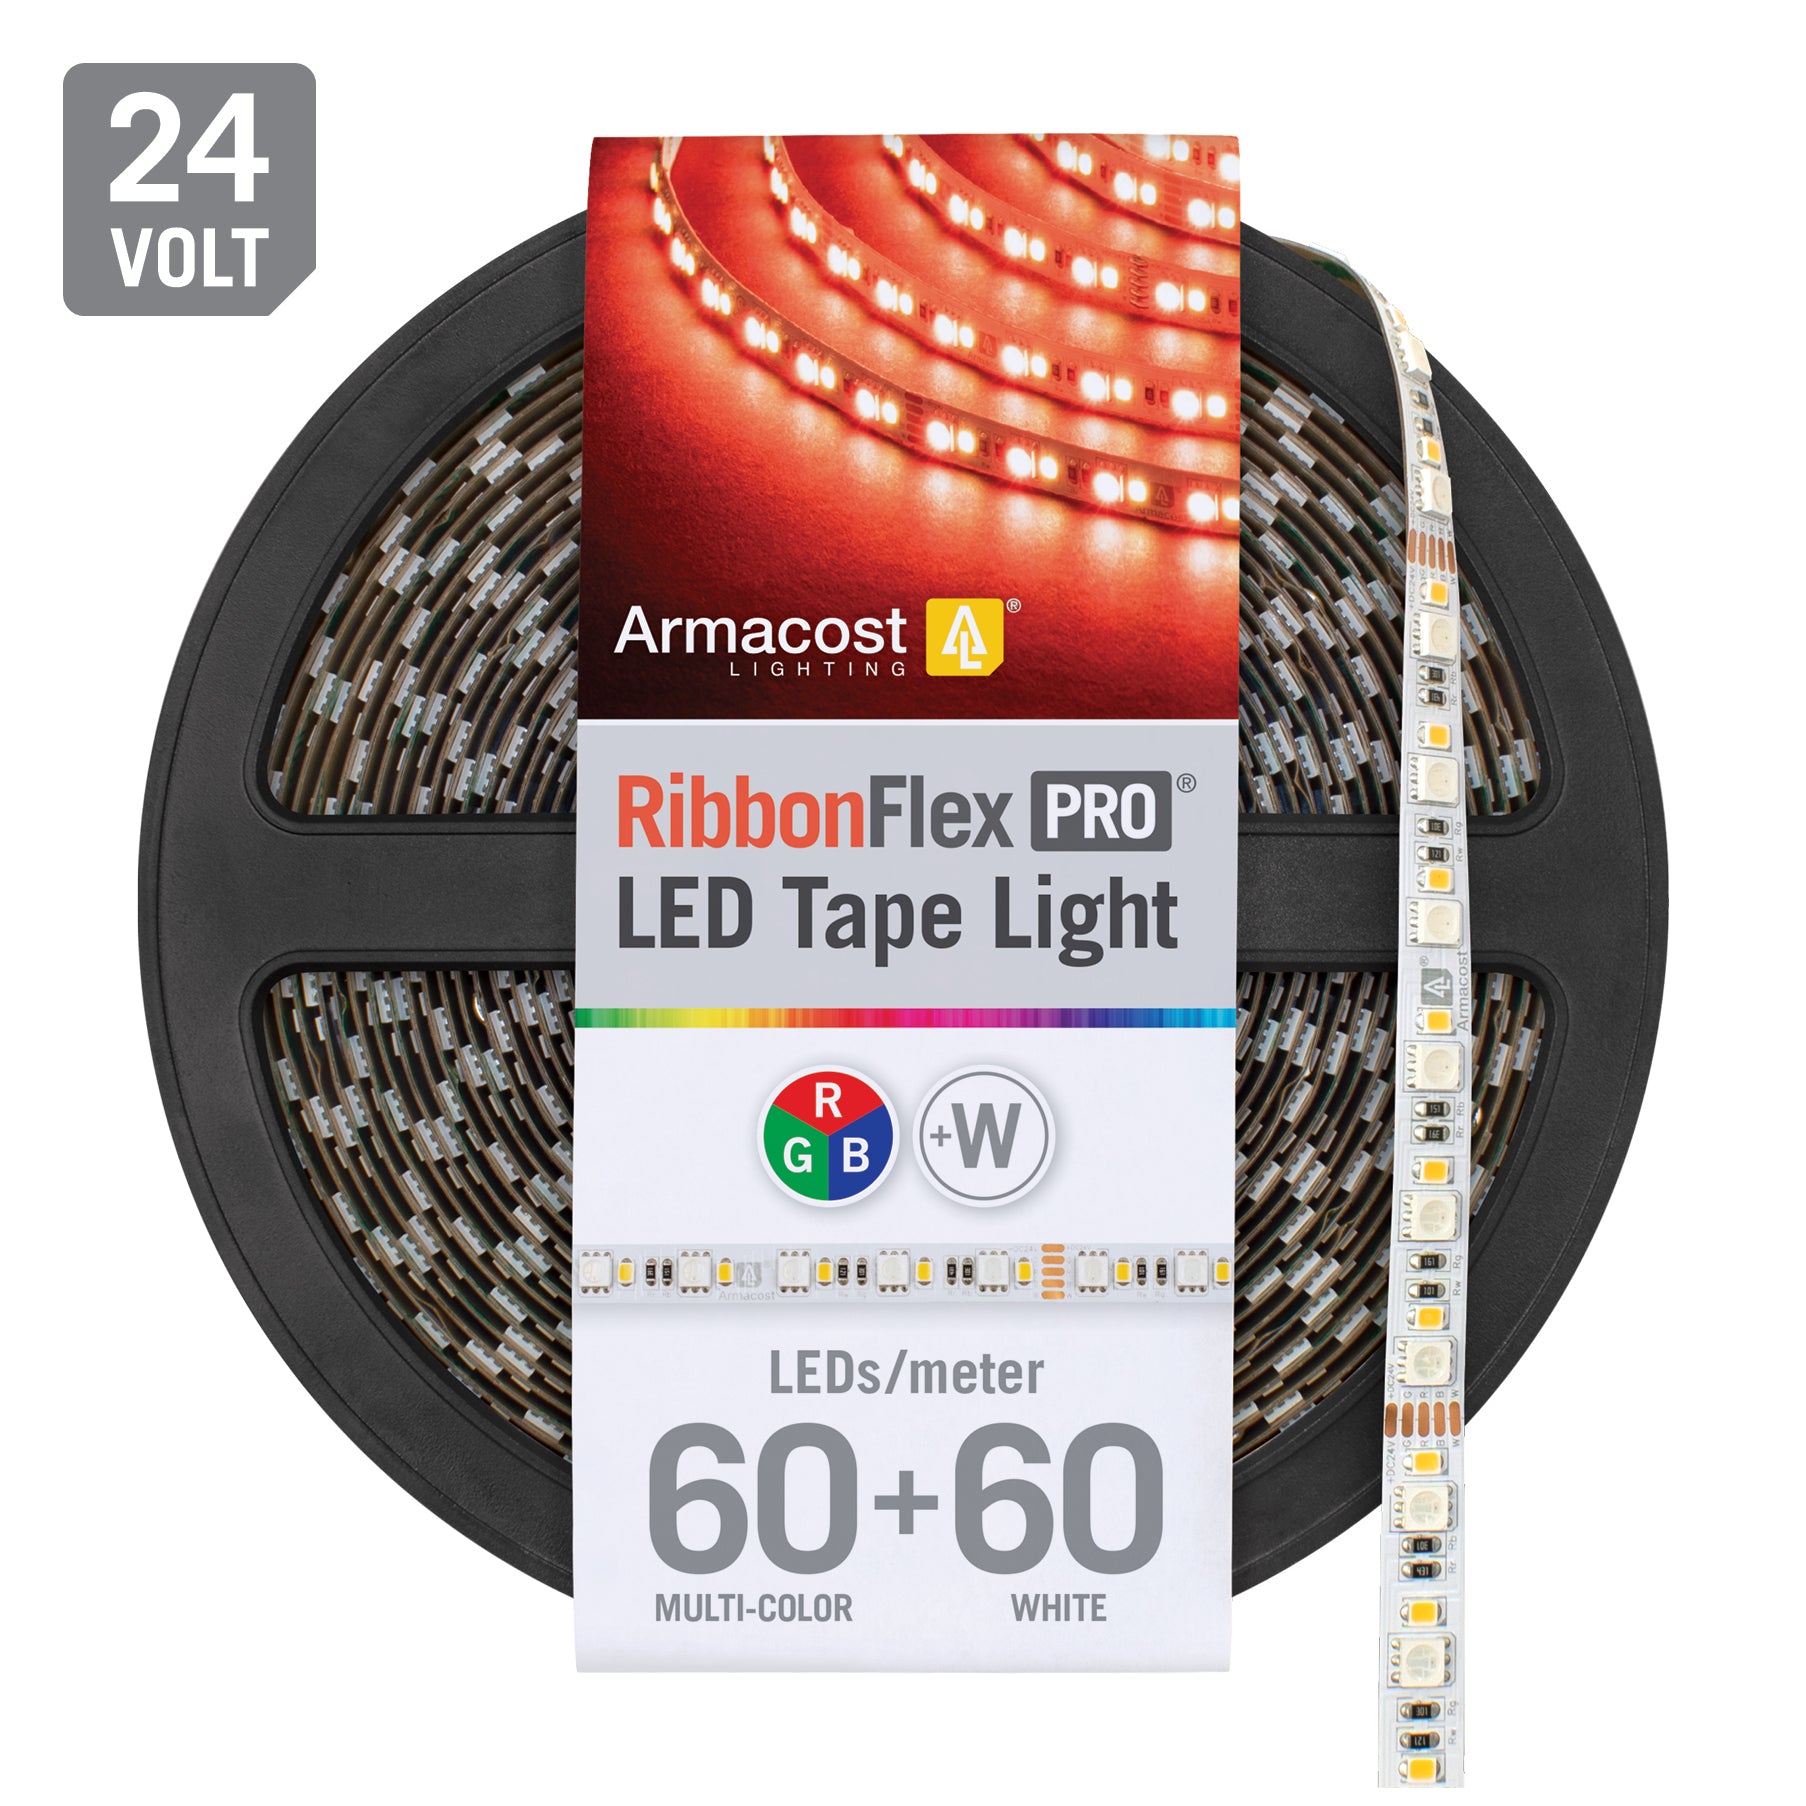 Armacost Lighting RibbonFlex Pro Multi-Color and White LED Tape Light 60 + 60 LEDs/m,32.8 ft (10m),624250